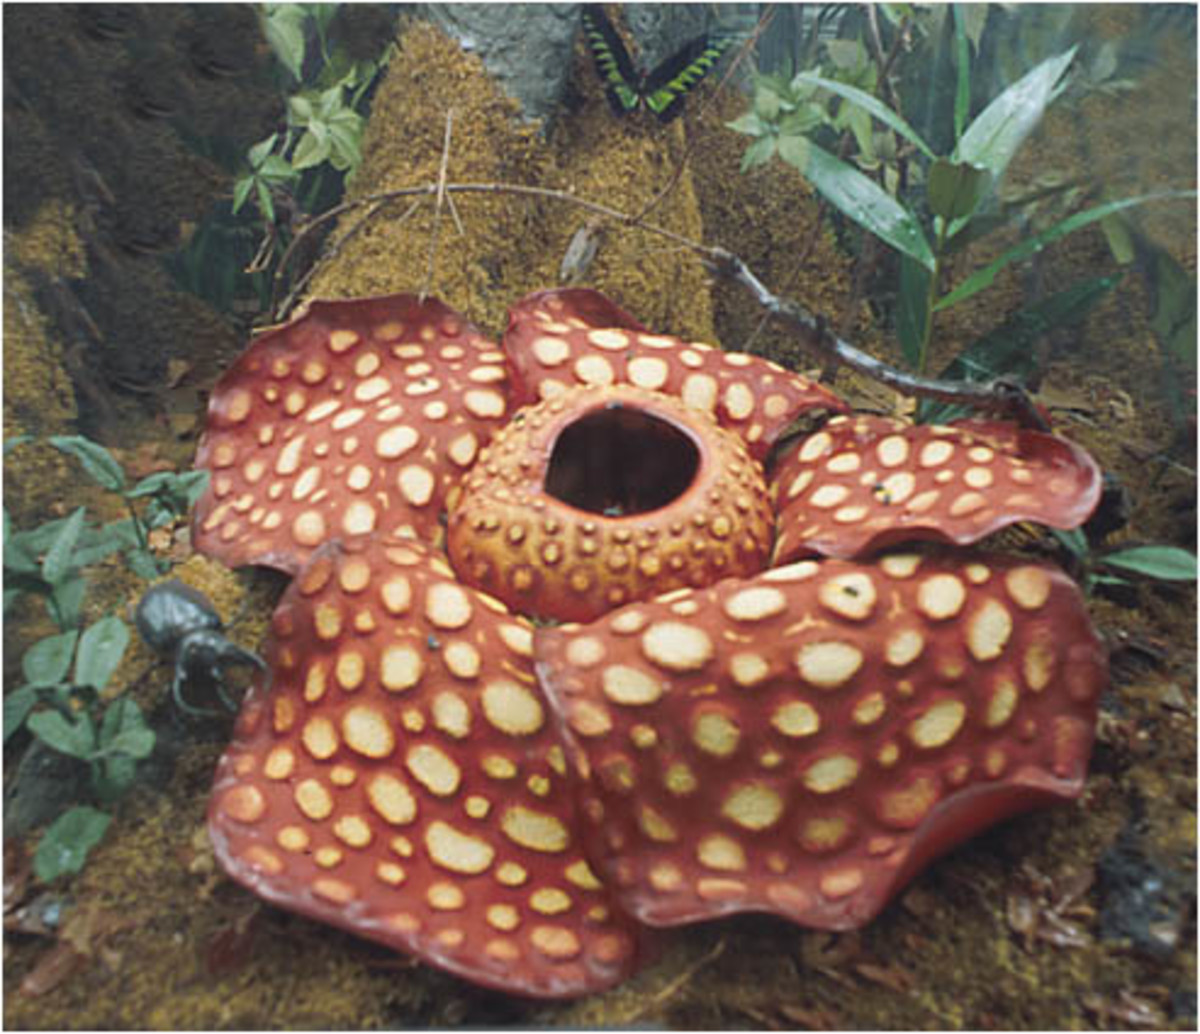 The famous Rafflesia flower